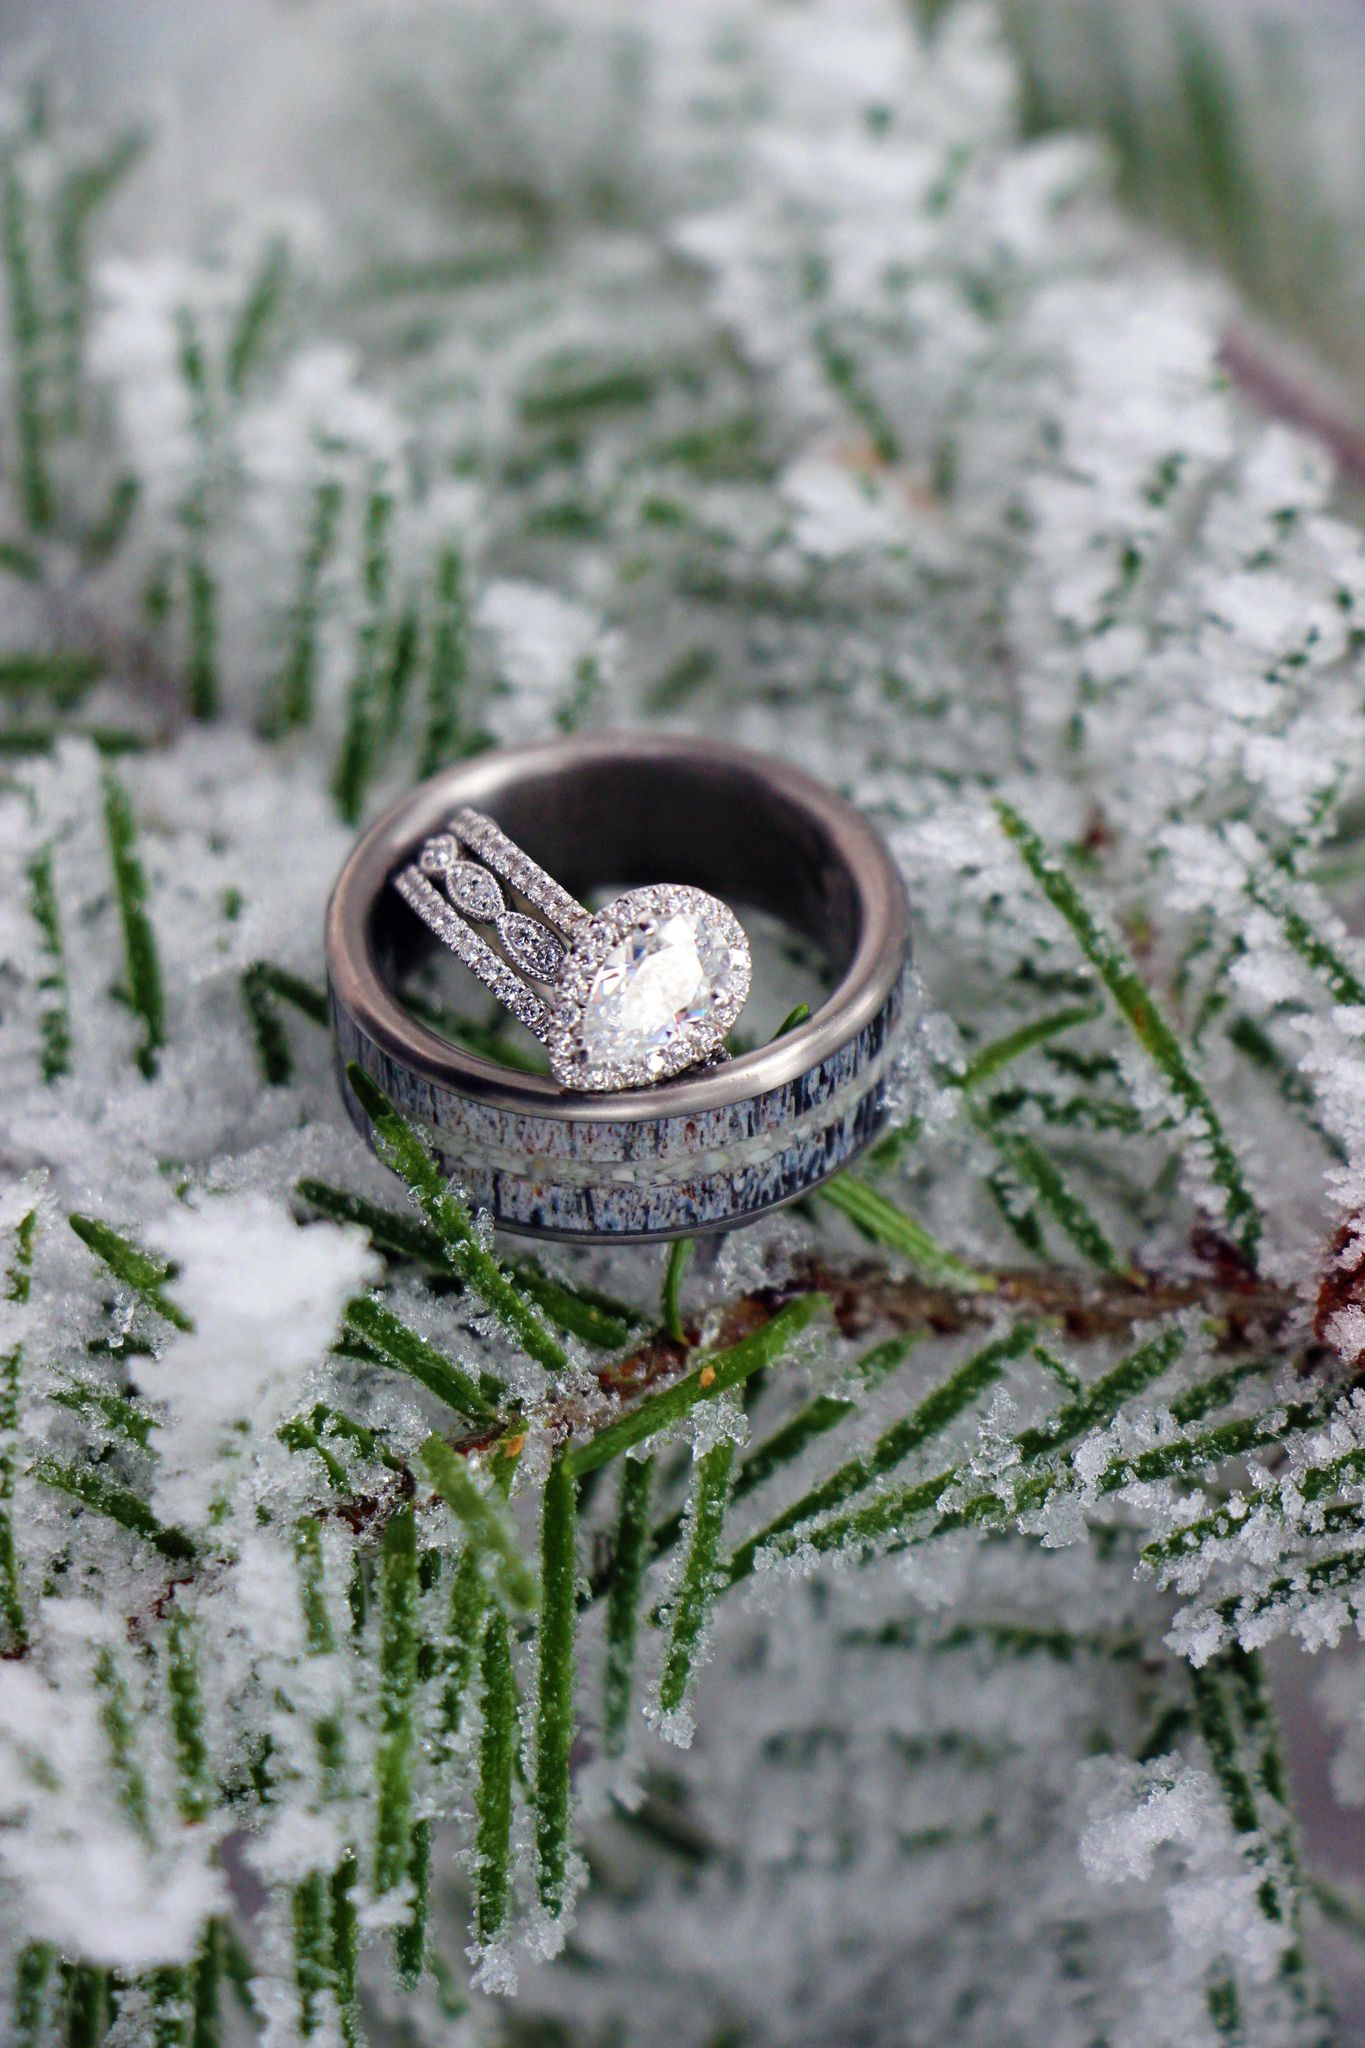 TheColorado - Snow Display - Men's Antler Wedding Rings